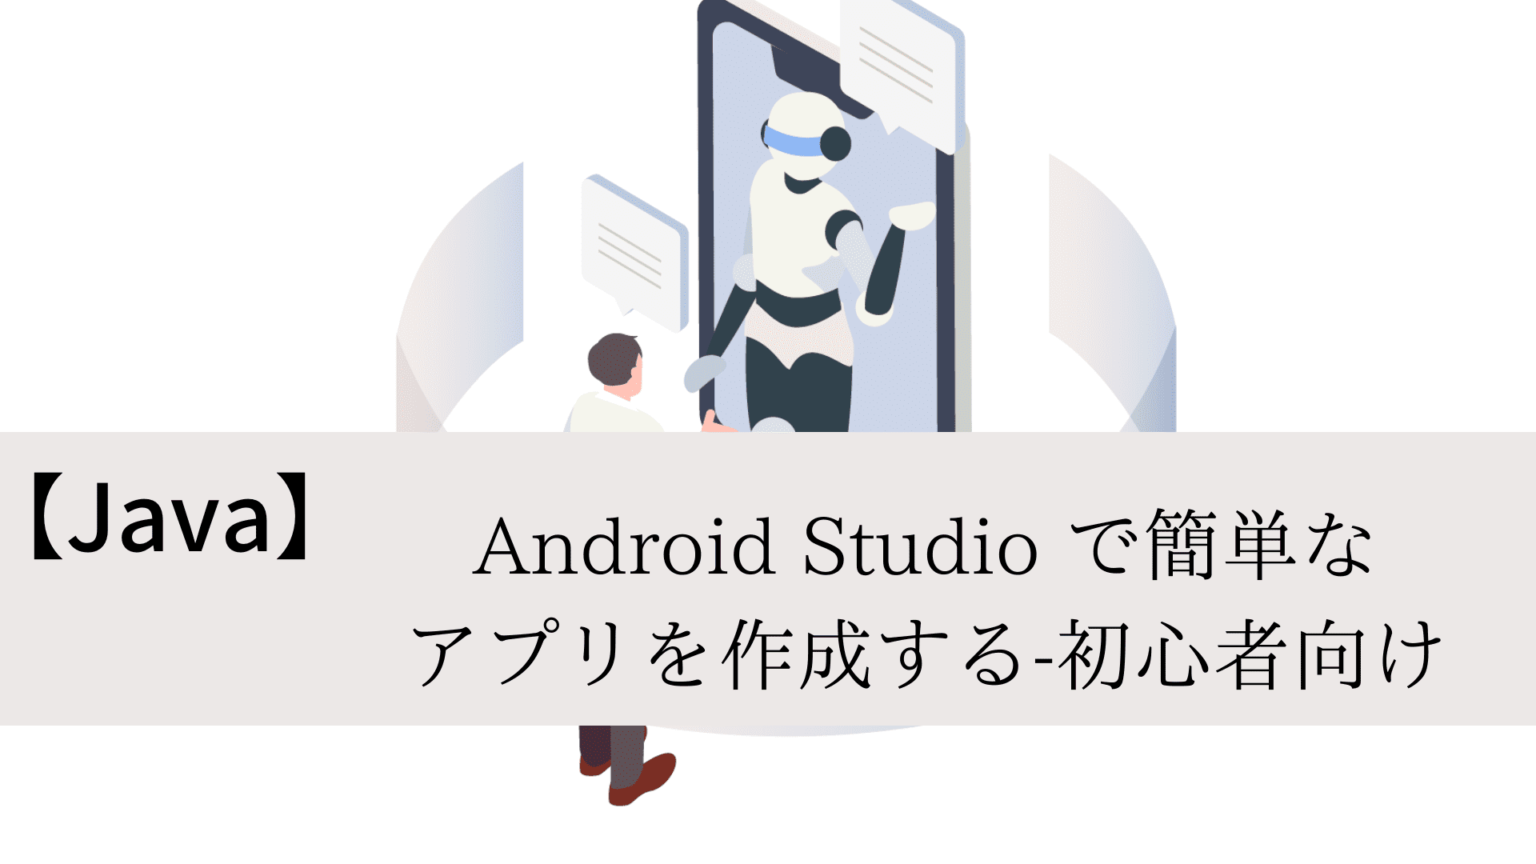 Android Studio で簡単なアプリを作成する-初心者向け【Java】